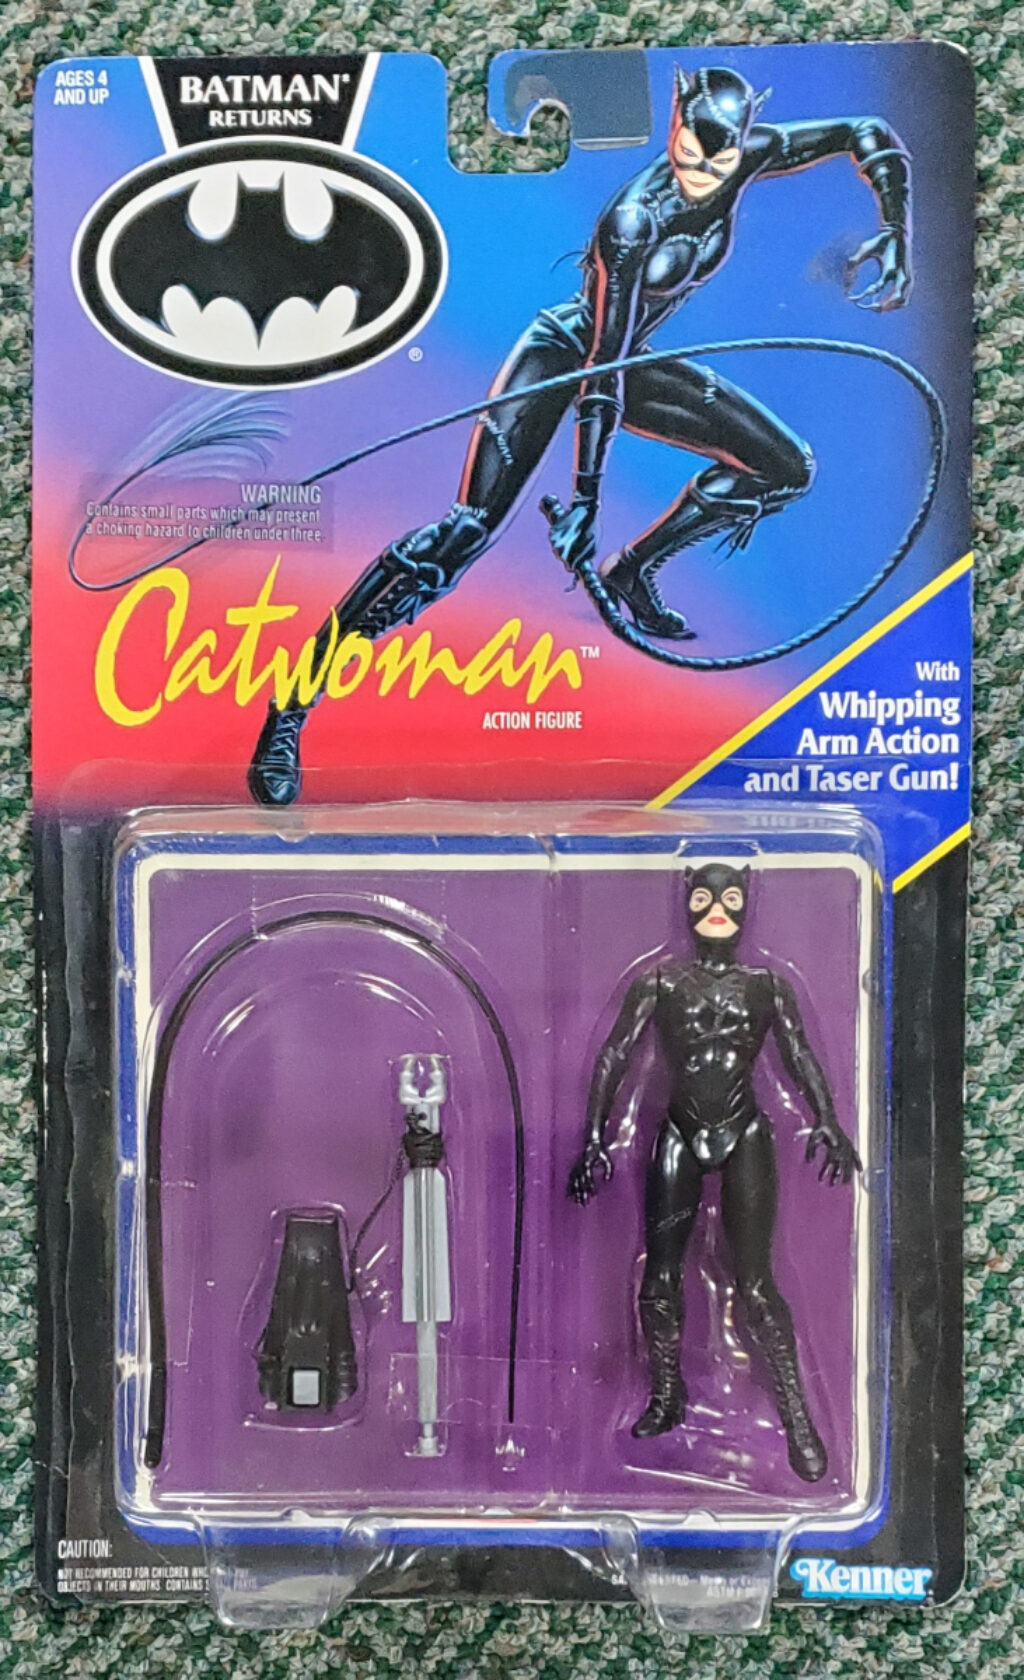 MOC Kenner Batman Returns Catwoman Action Figure - Mint on Factory Sealed Card 1